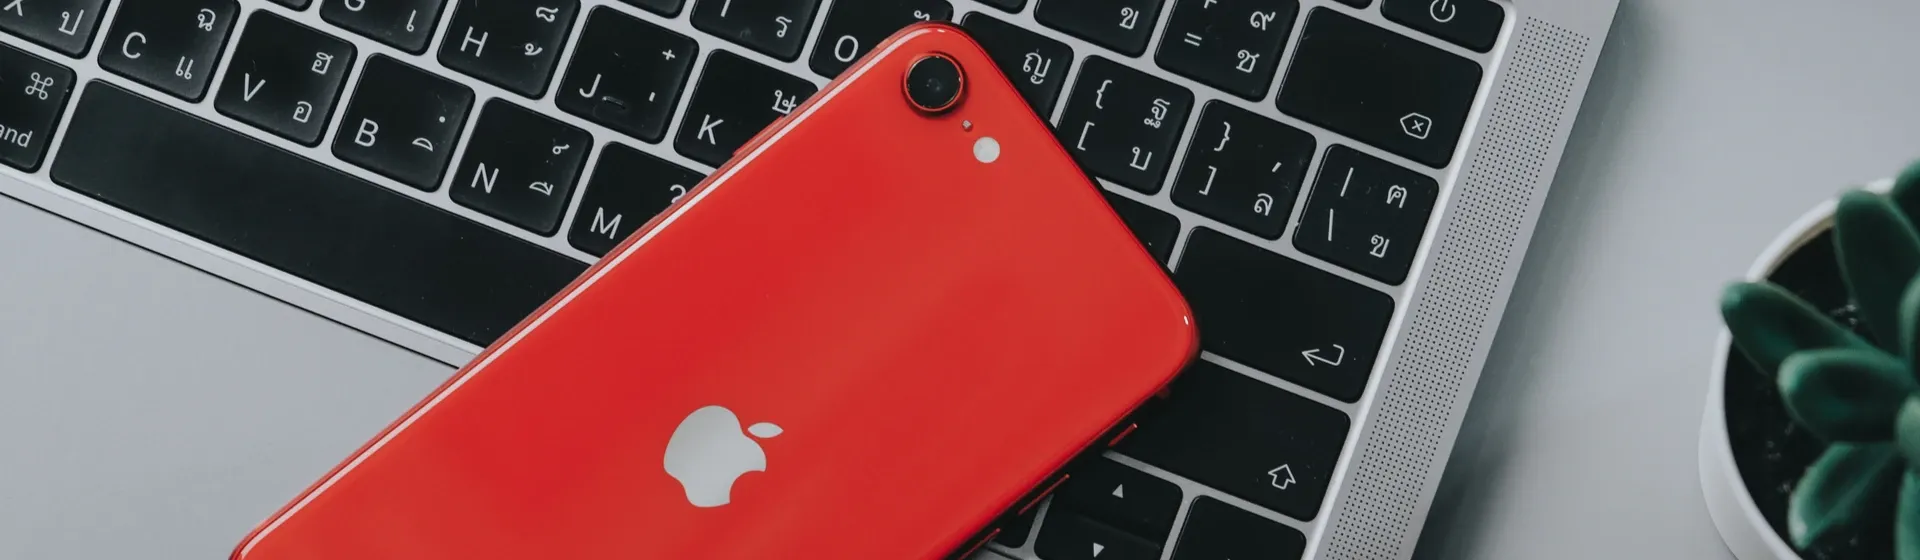 iPhone SE 3: o que já sabemos sobre o celular da Apple